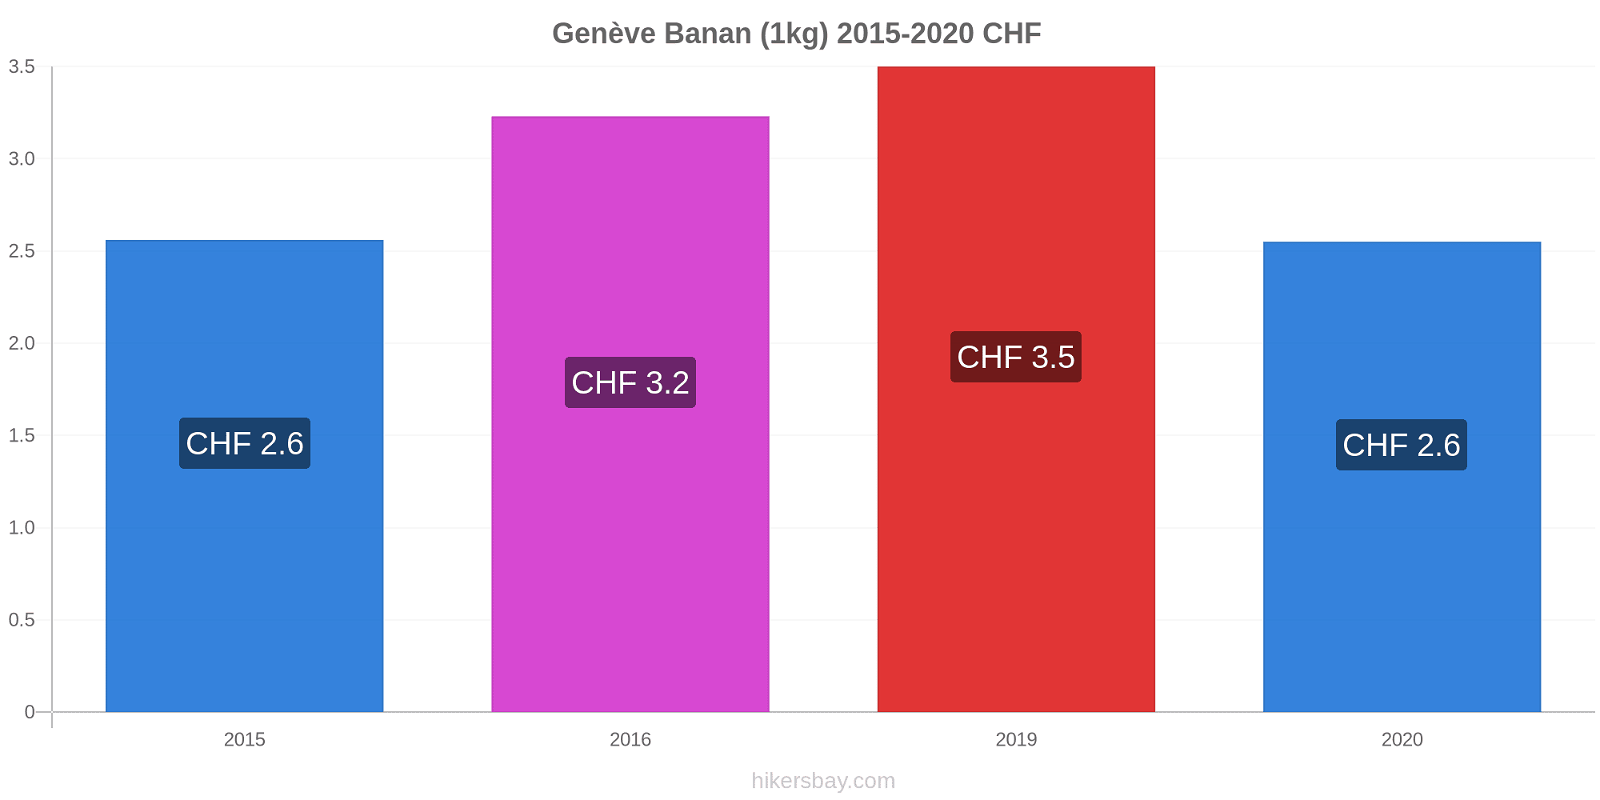 Genève prisendringer Banan (1kg) hikersbay.com